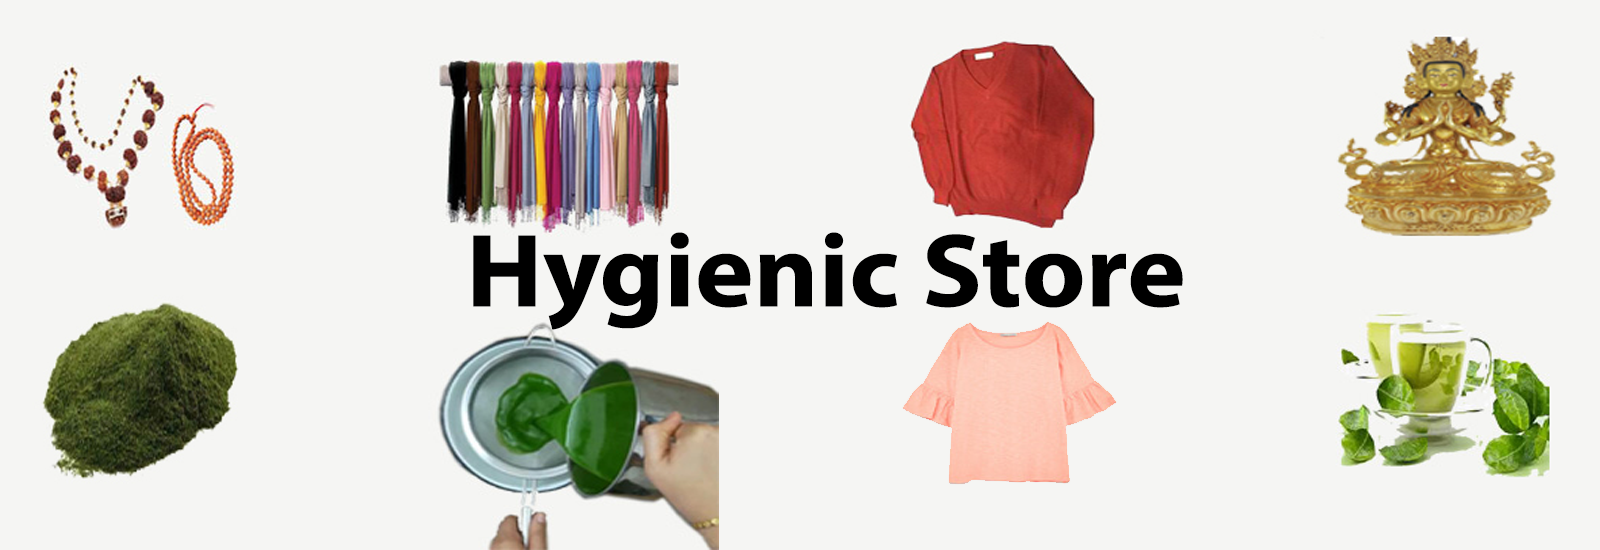 Hygienic Store